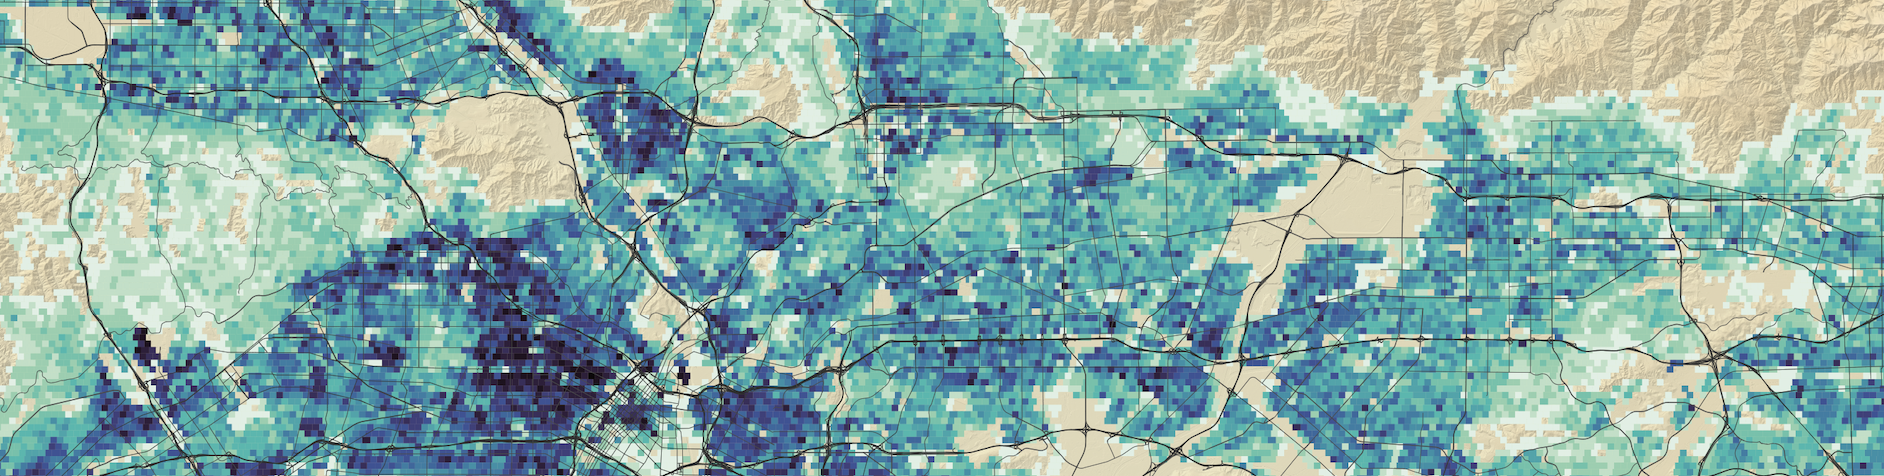 population density in los angeles county, california